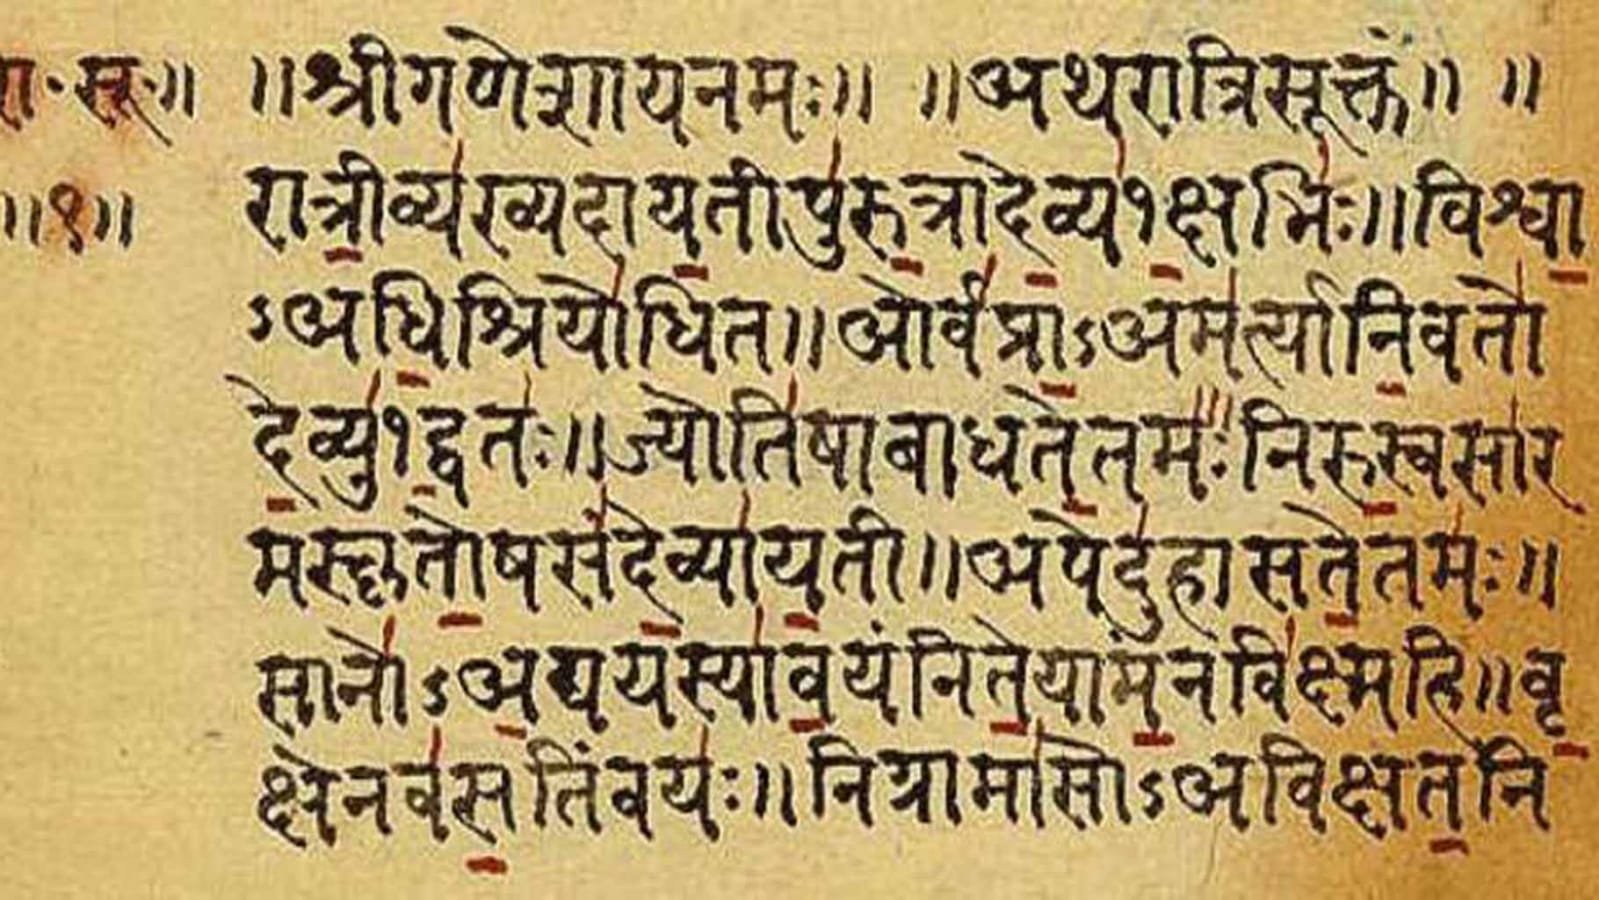 Brief Introduction to Sanskrit